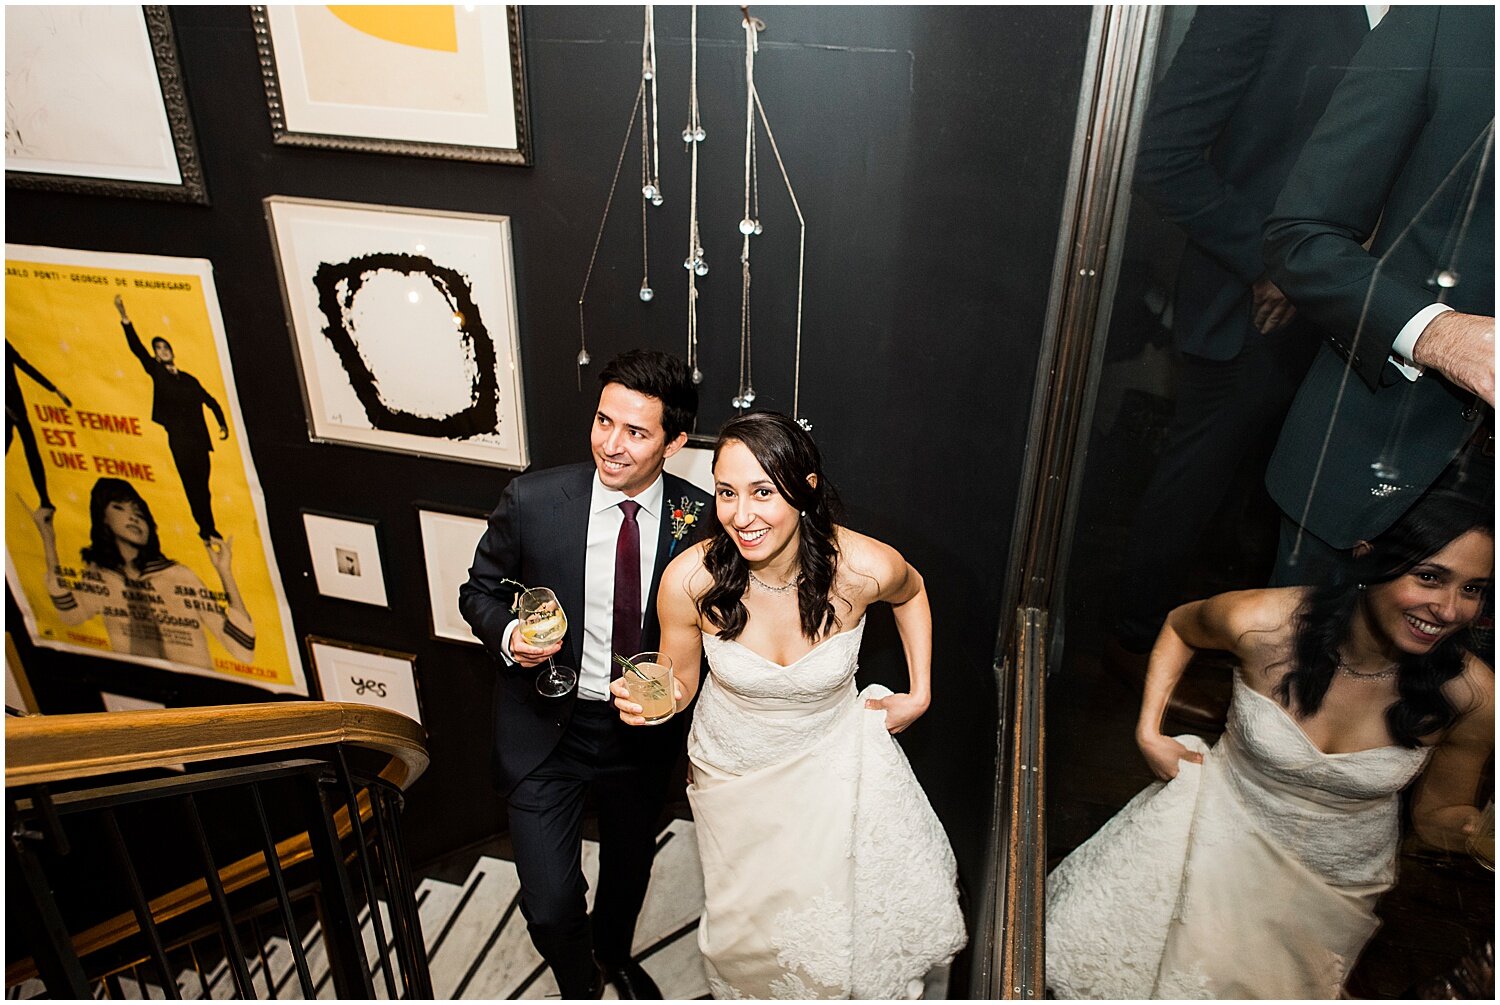 Havens-Kitchen-Wedding-Venue-NYC-Apollo-Fields-Weddings-Photographers-New-York-City-074.jpg